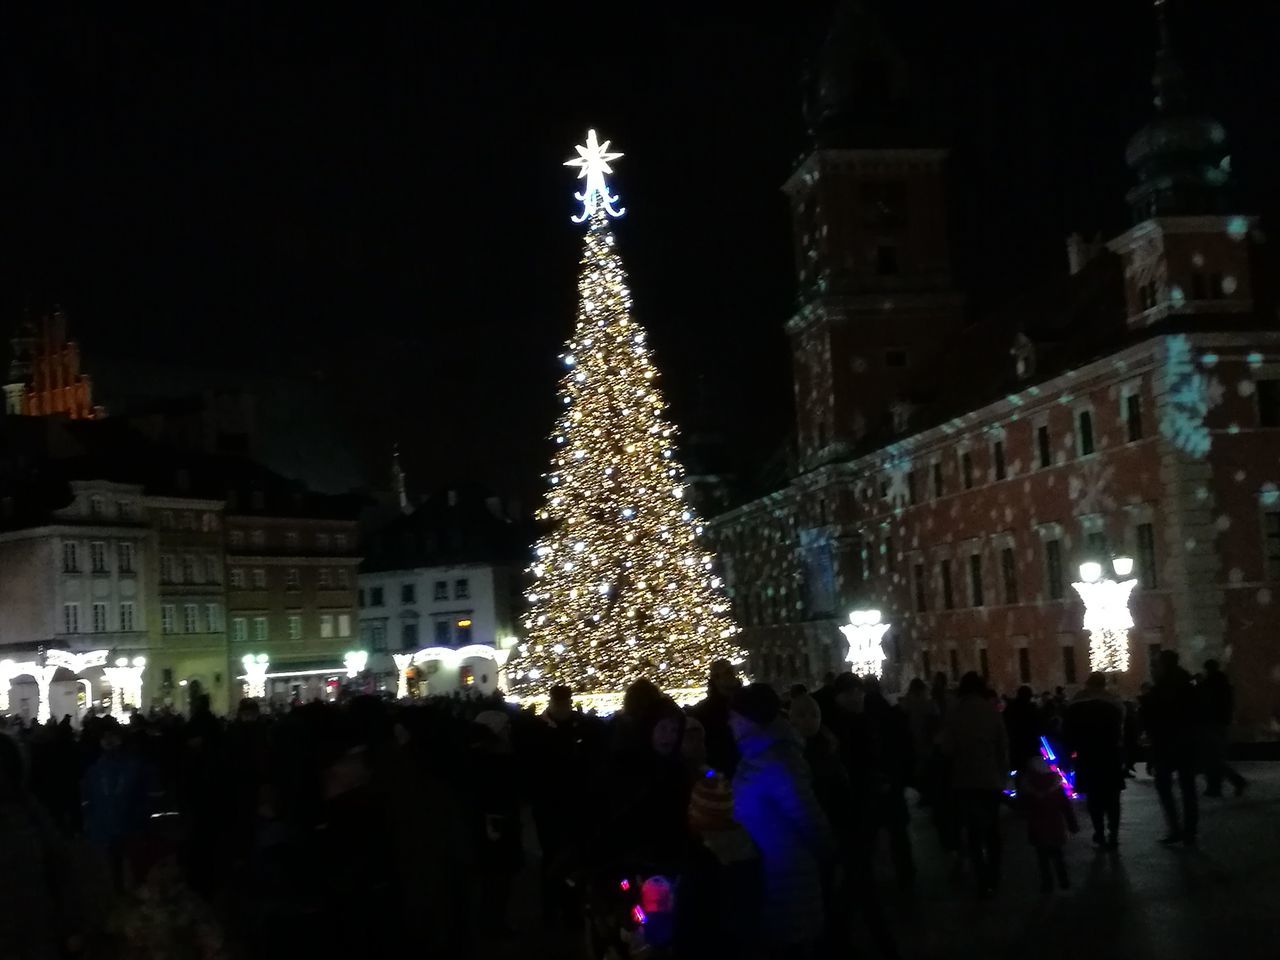 VIEW OF ILLUMINATED CHRISTMAS TREE AT NIGHT